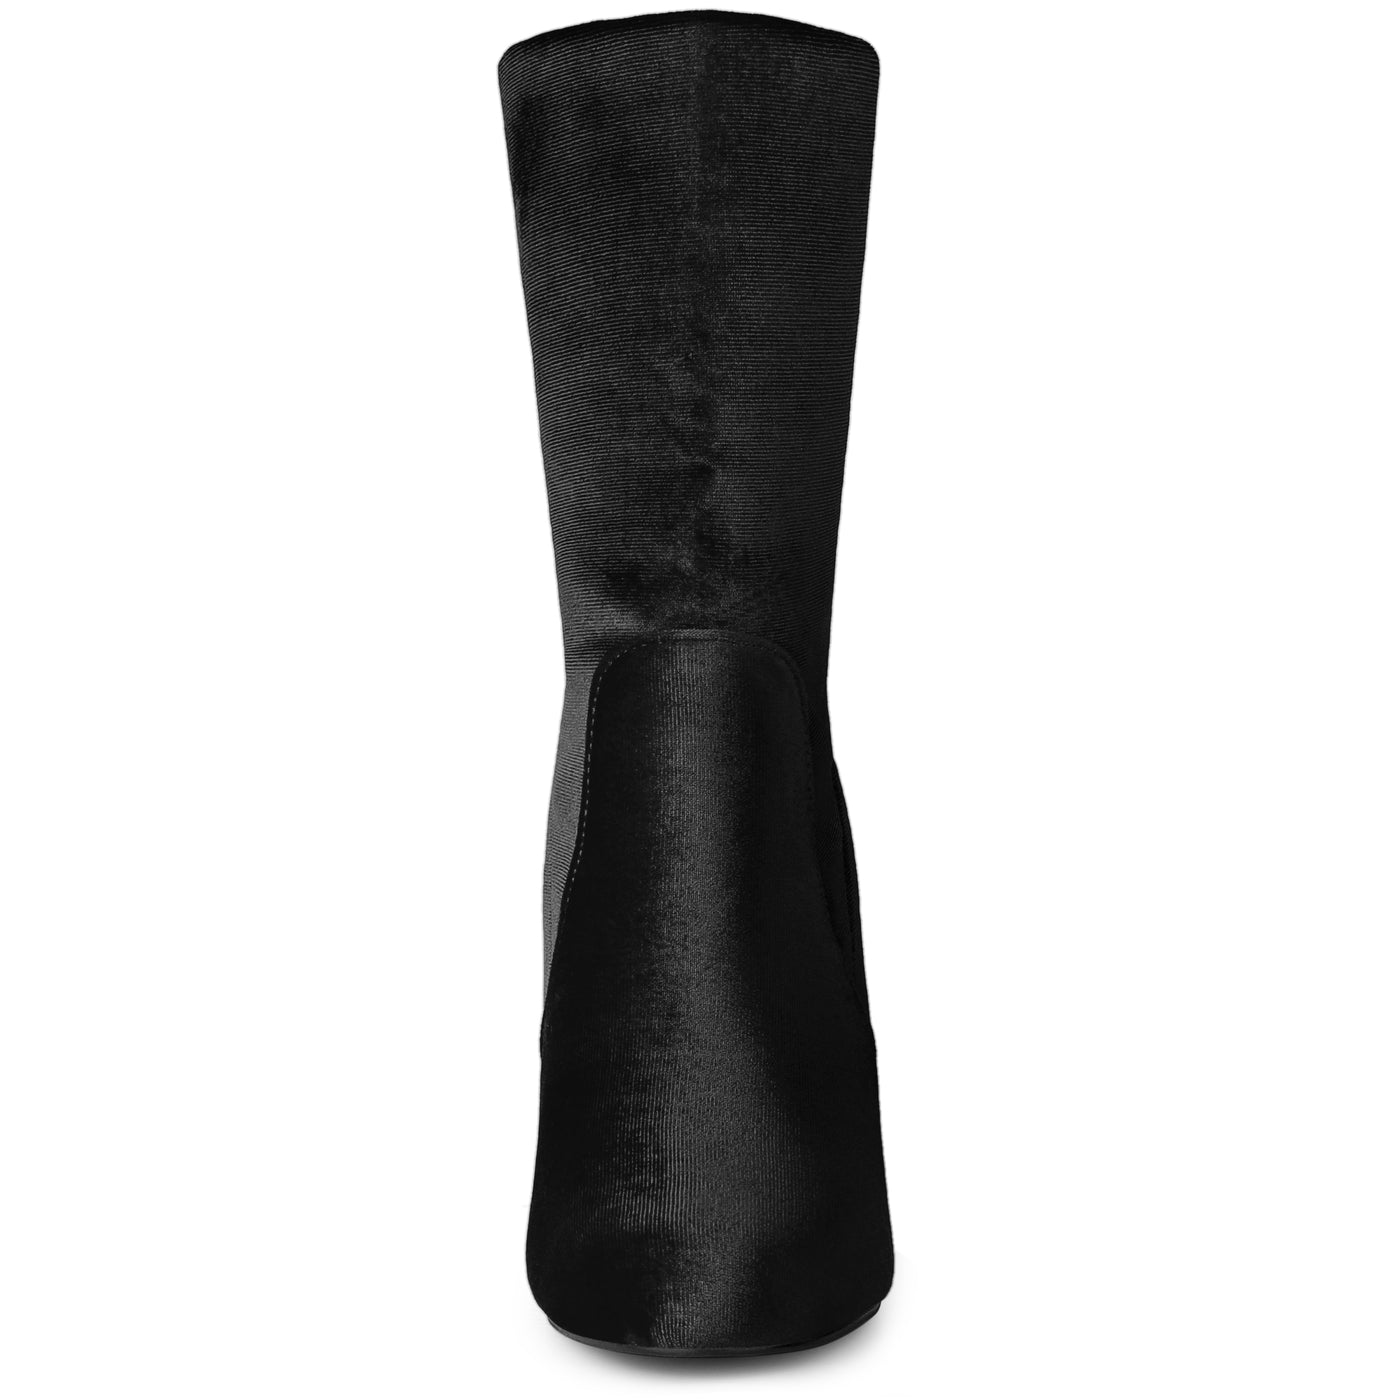 Allegra K Round Toe Block Heel Foldable Mid Calf Faux Velvet Boots